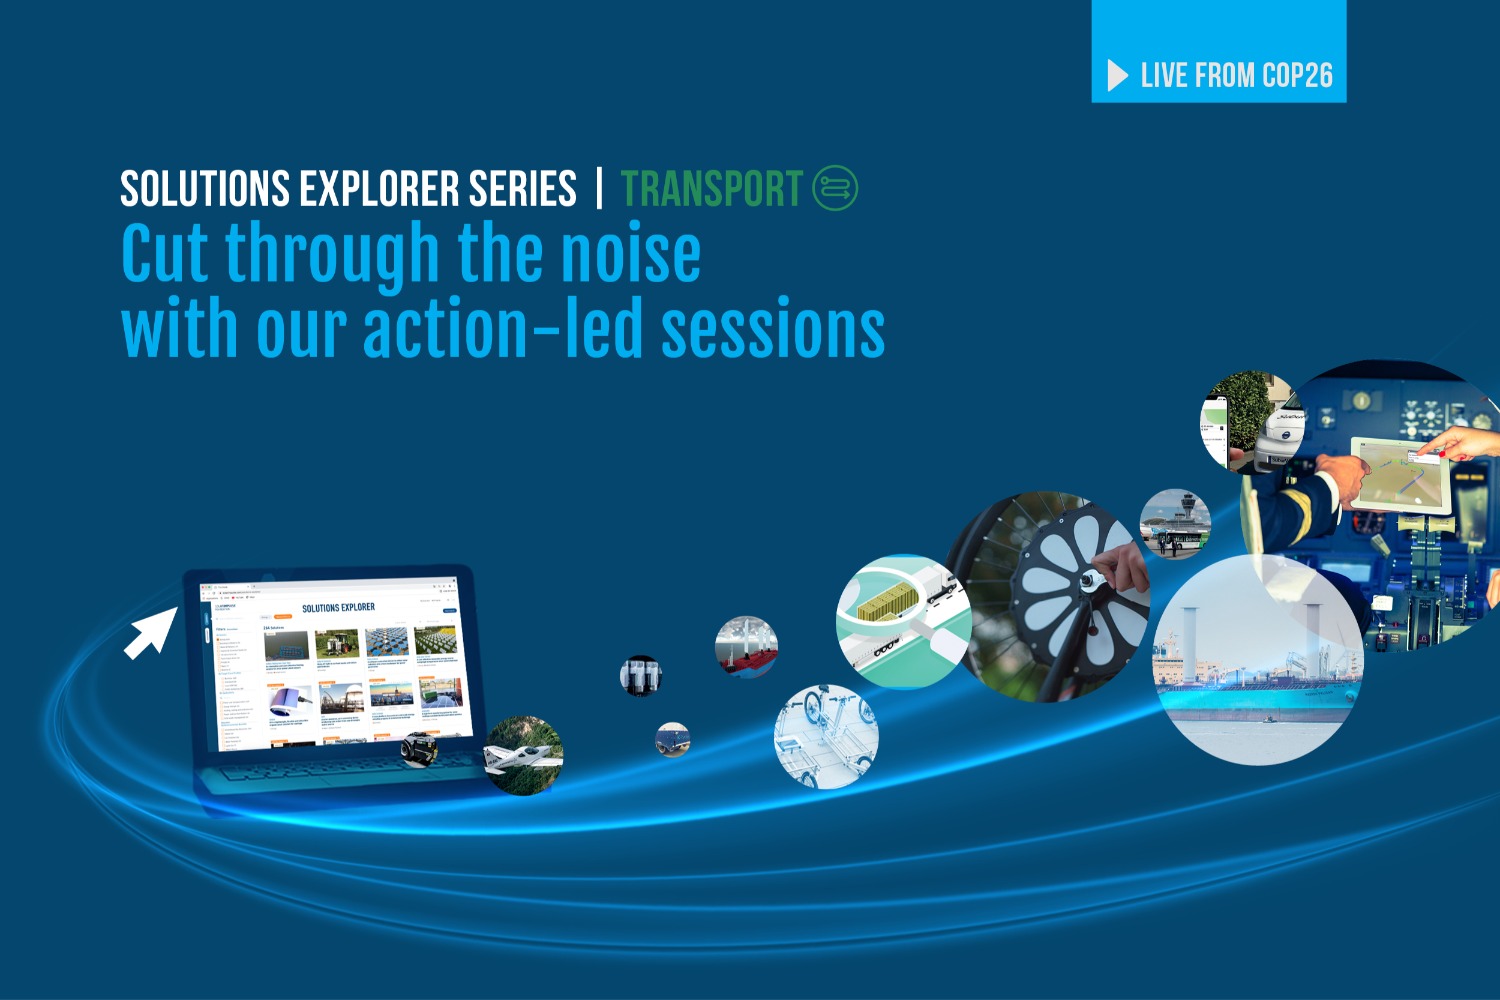 The Solutions Explorer Series - Transport